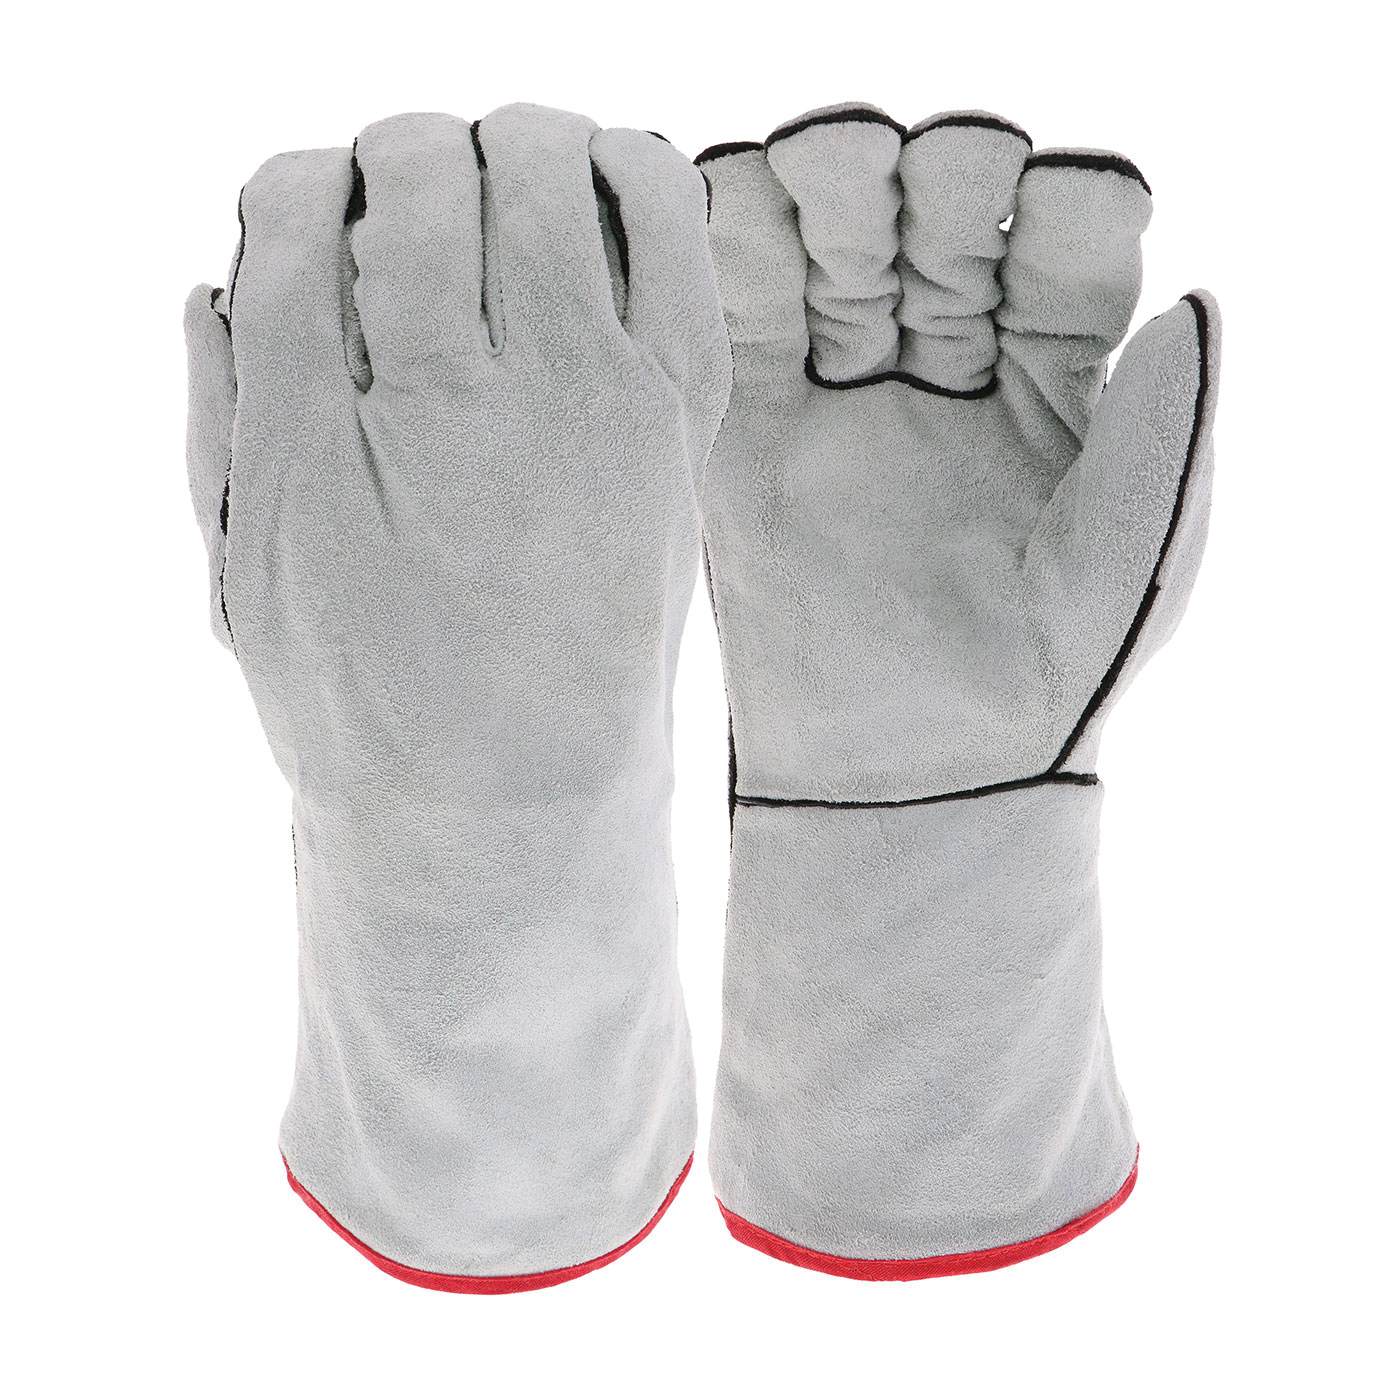 PIP® 930 Standard Grade Welding Gloves, L, Cotton/Split Cowhide Leather, Gray, Cotton Sock Lining, Gauntlet Cuff, 13-1/2 in L